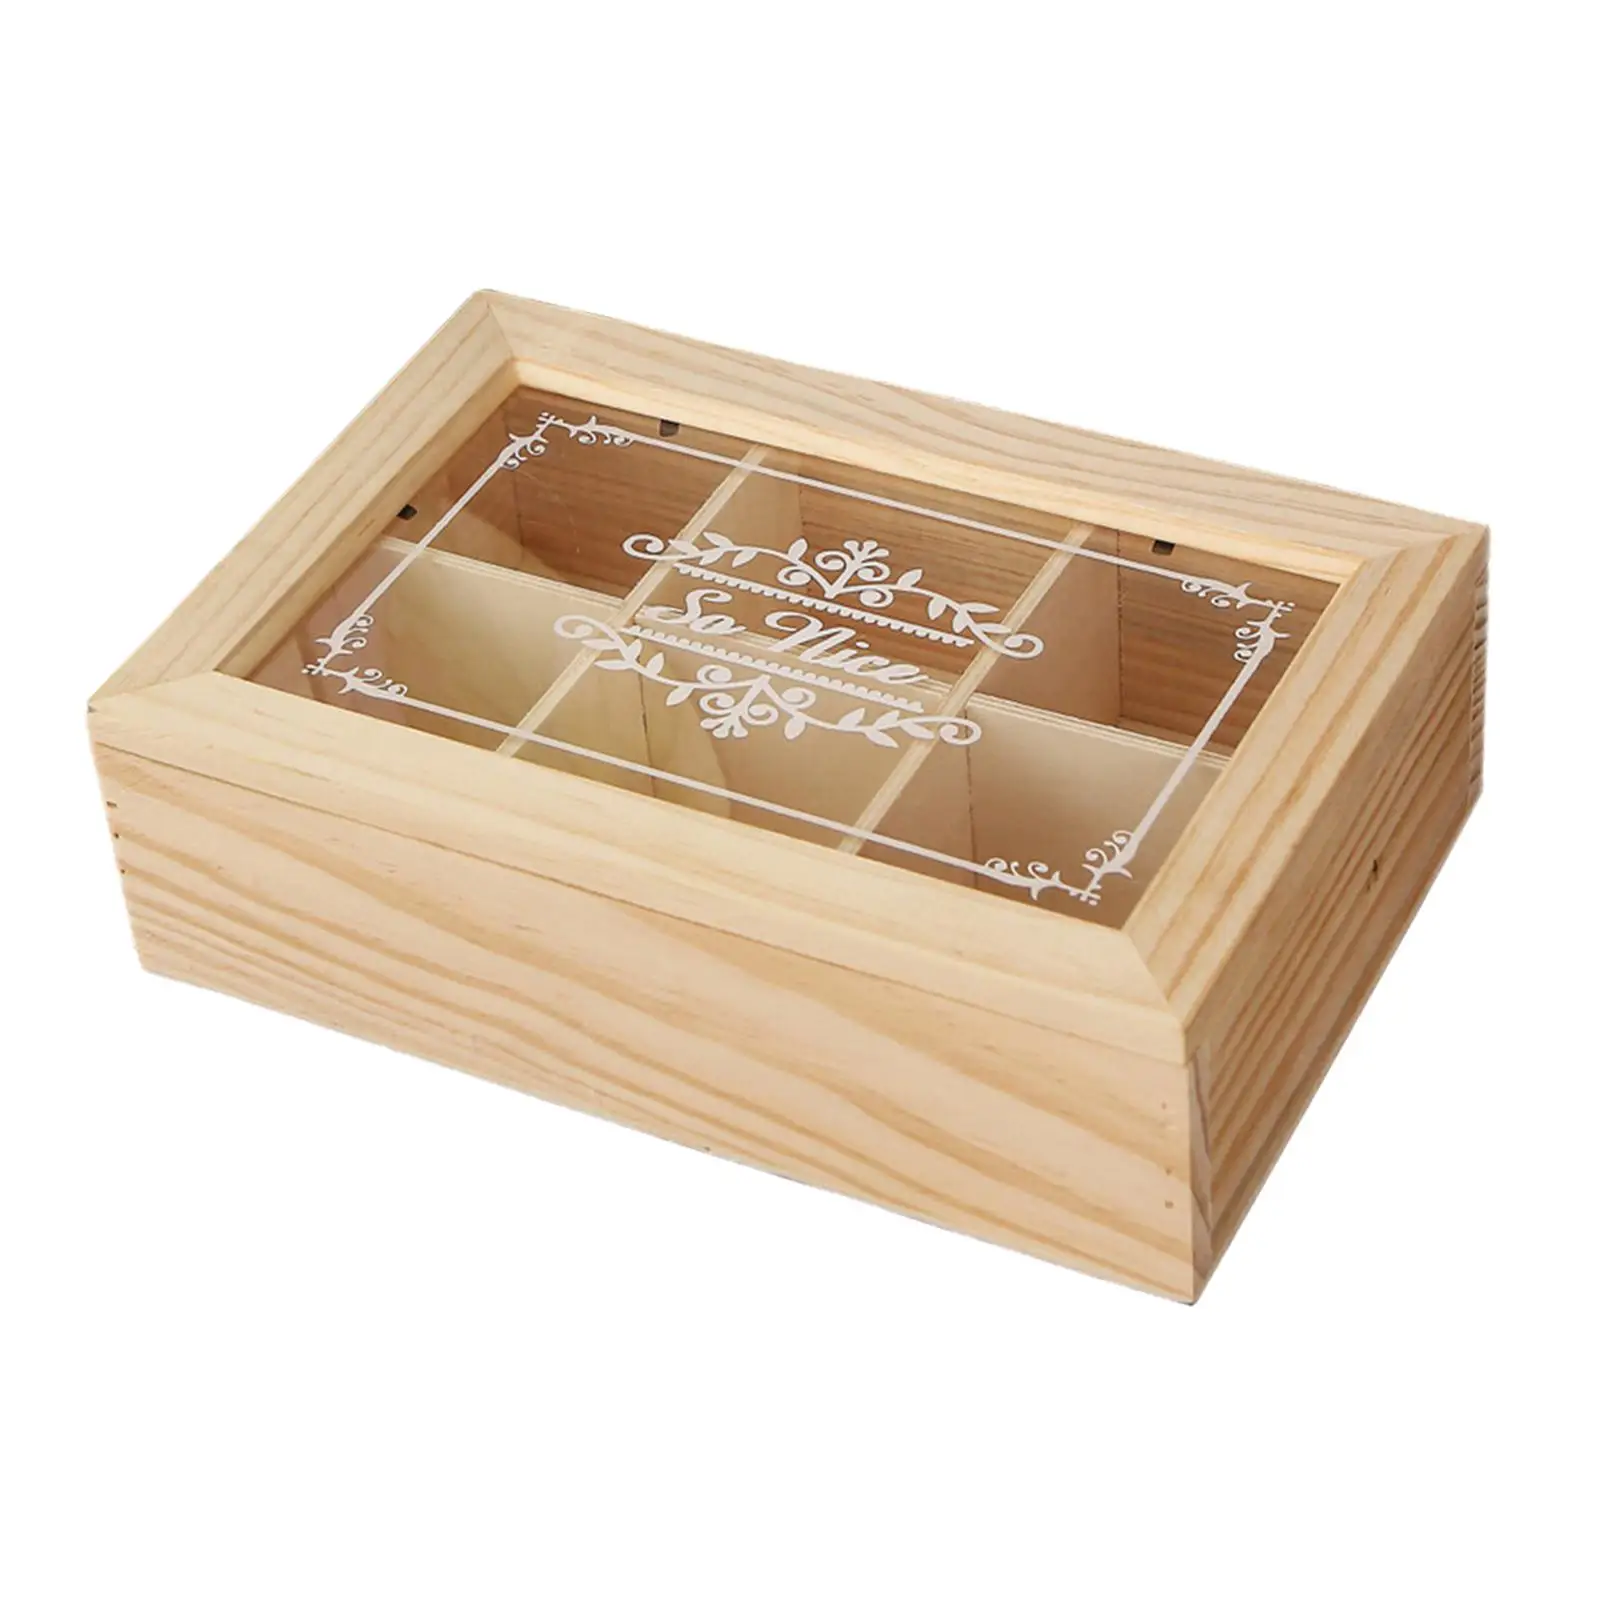 Wooden Tea Box 6 Grids Multifunctional Tea Storage Box with Lid Tea Bag Holder for Home Cabinet Kitchen Decor Organization